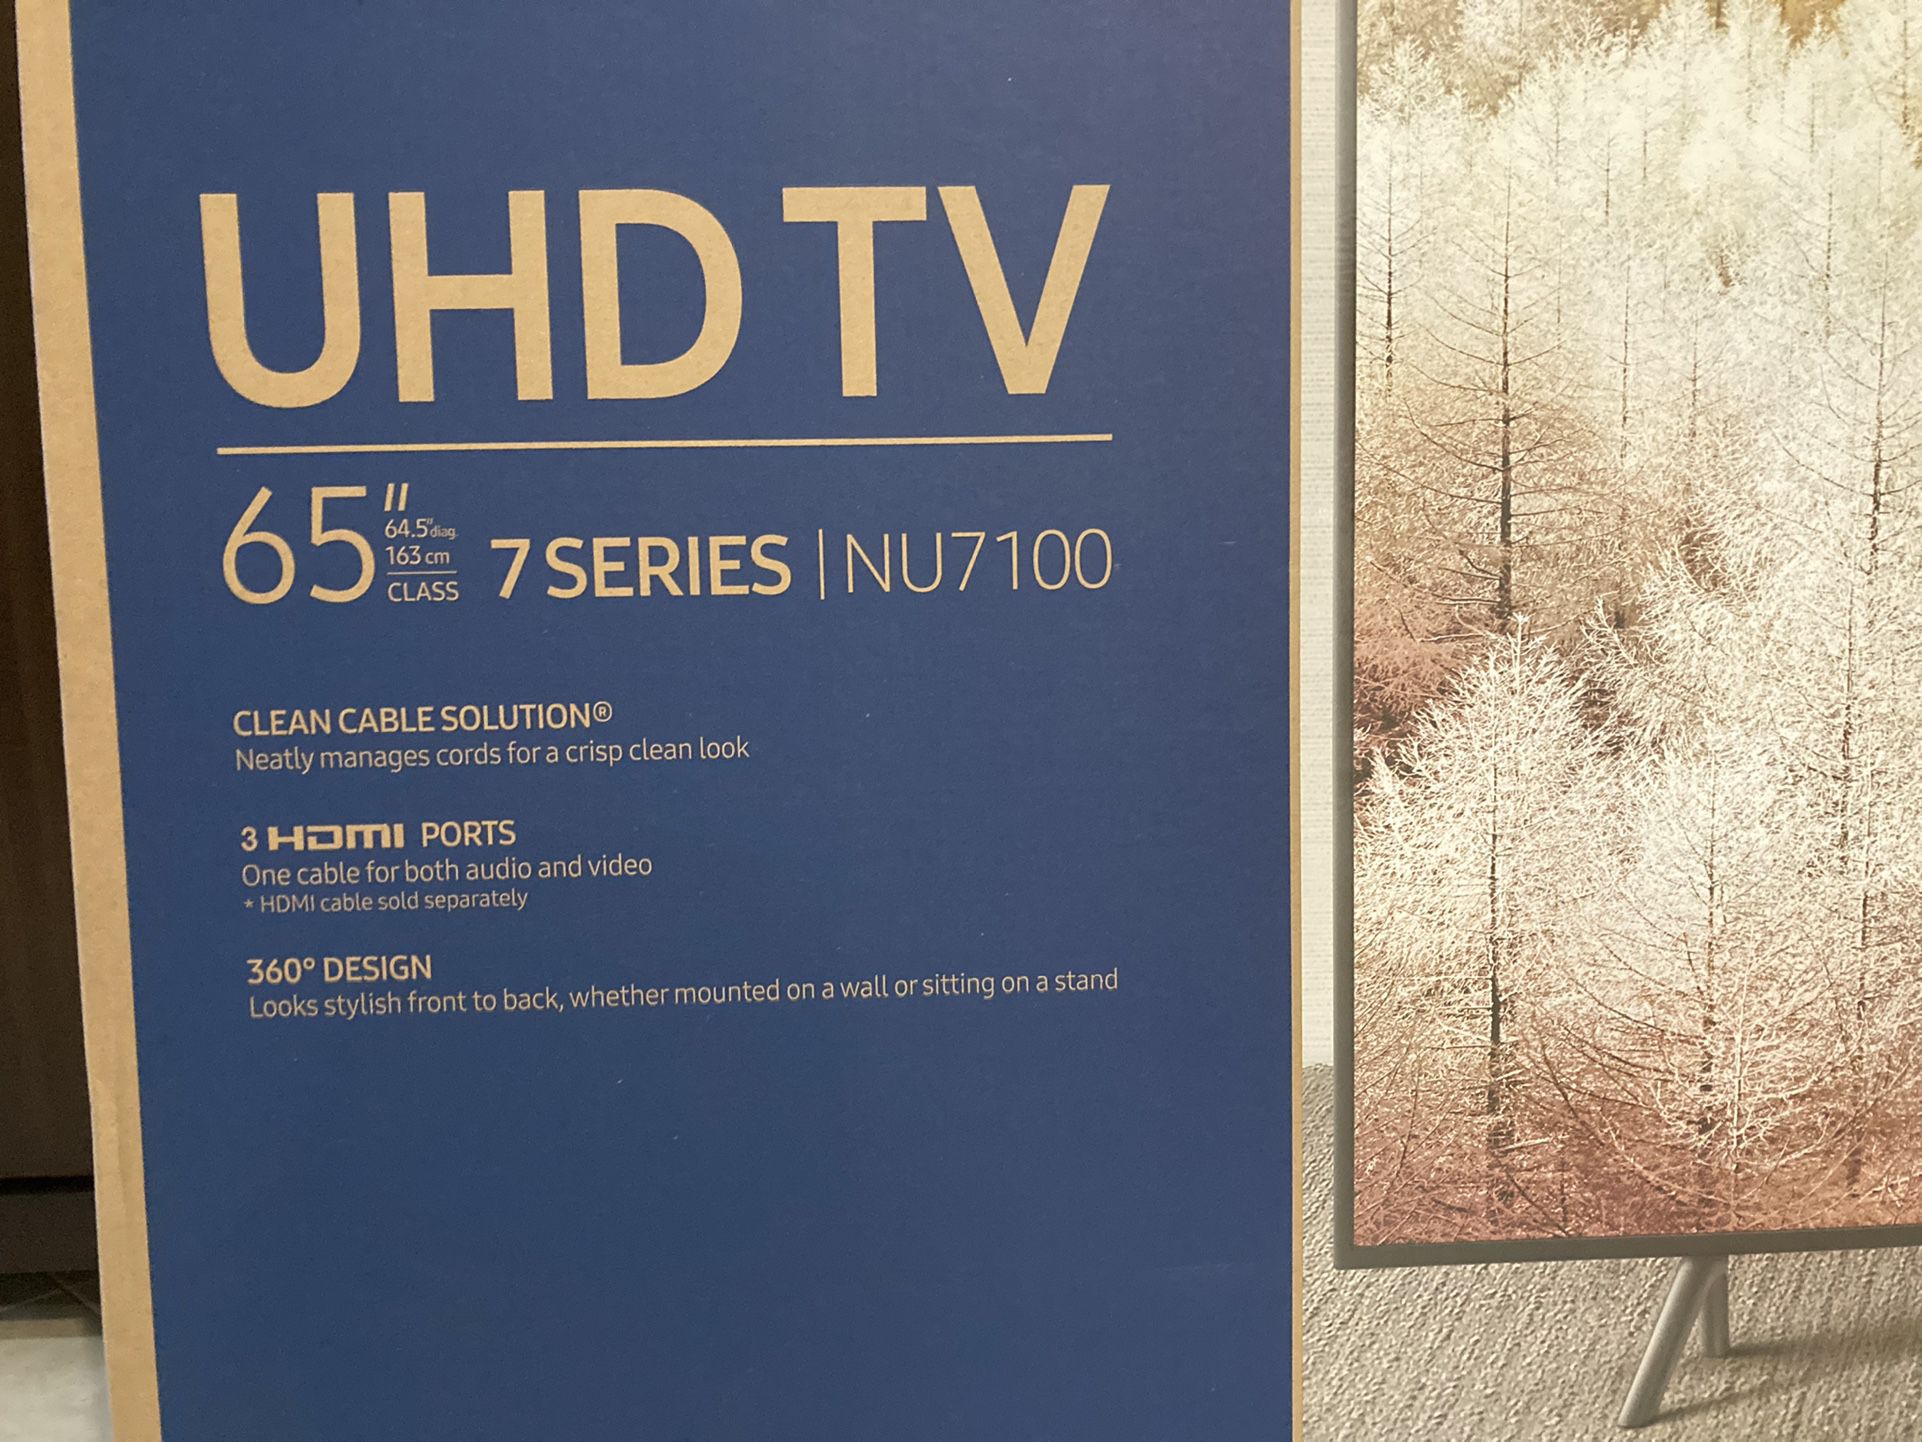 Samsung 65” UHDTV 7 Series NU7100